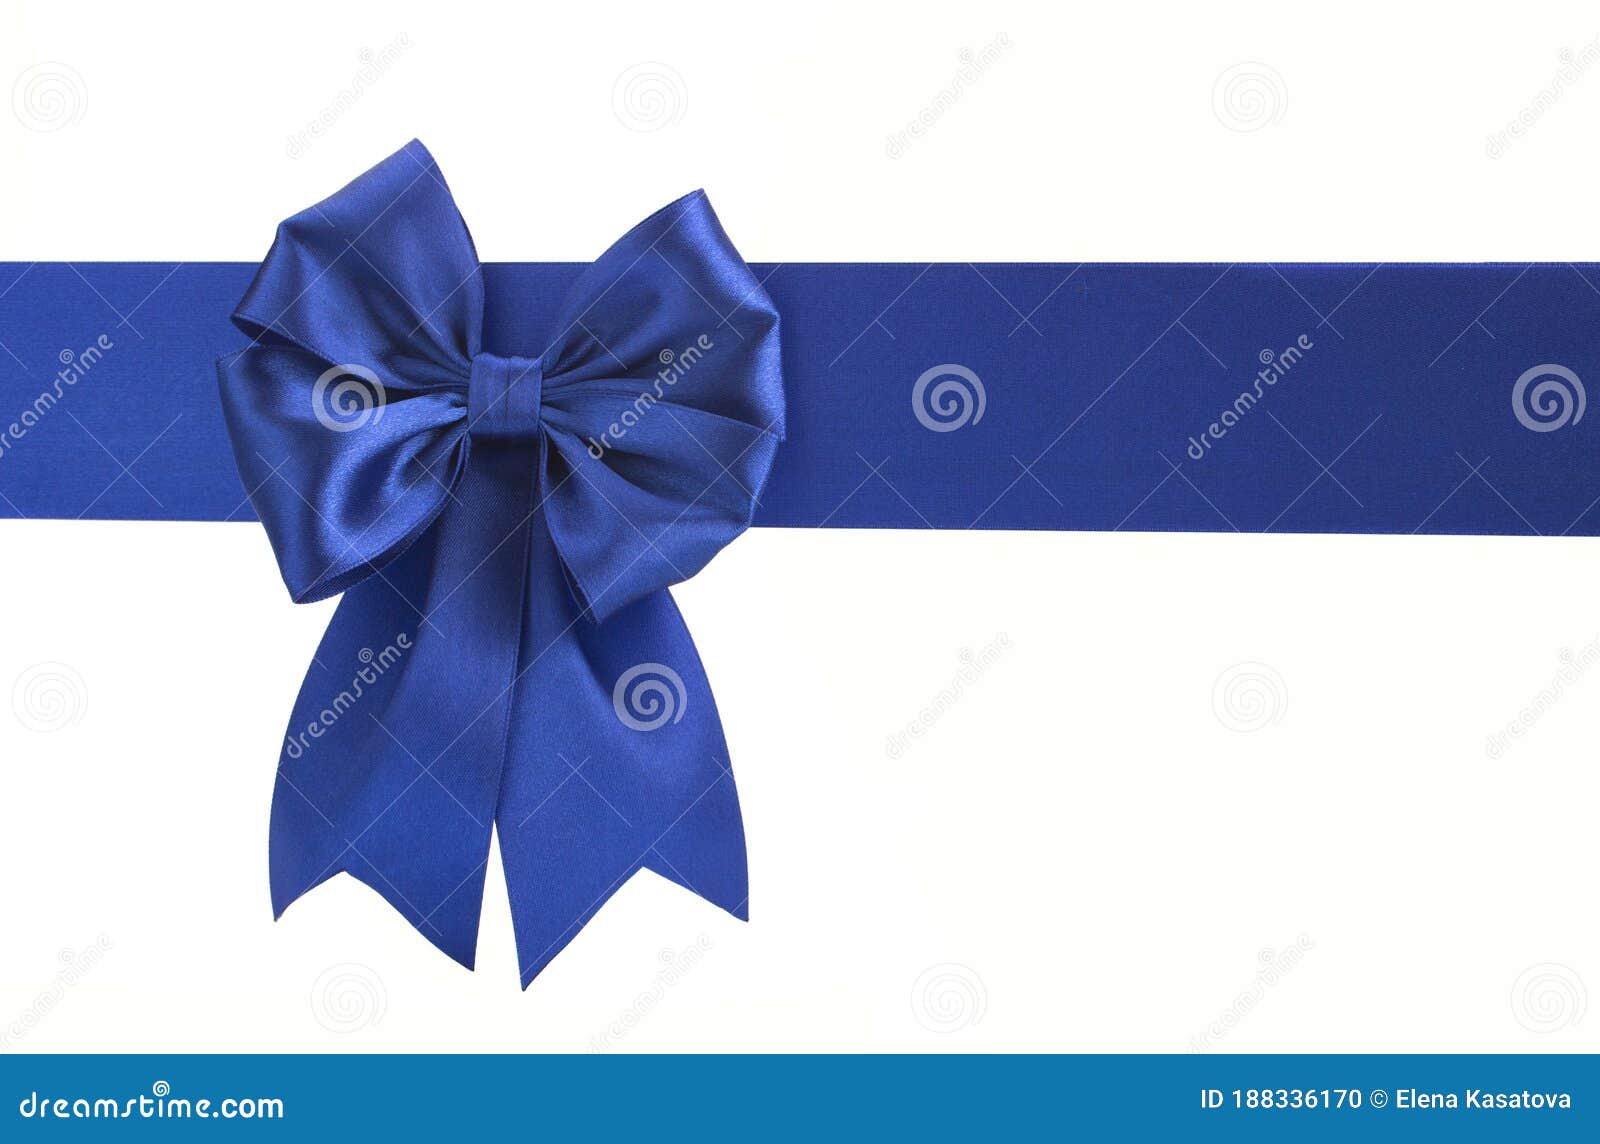 vindruer serviet forlænge Blue Bow on a Blue Ribbon on a White Background Stock Photo - Image of  present, border: 188336170